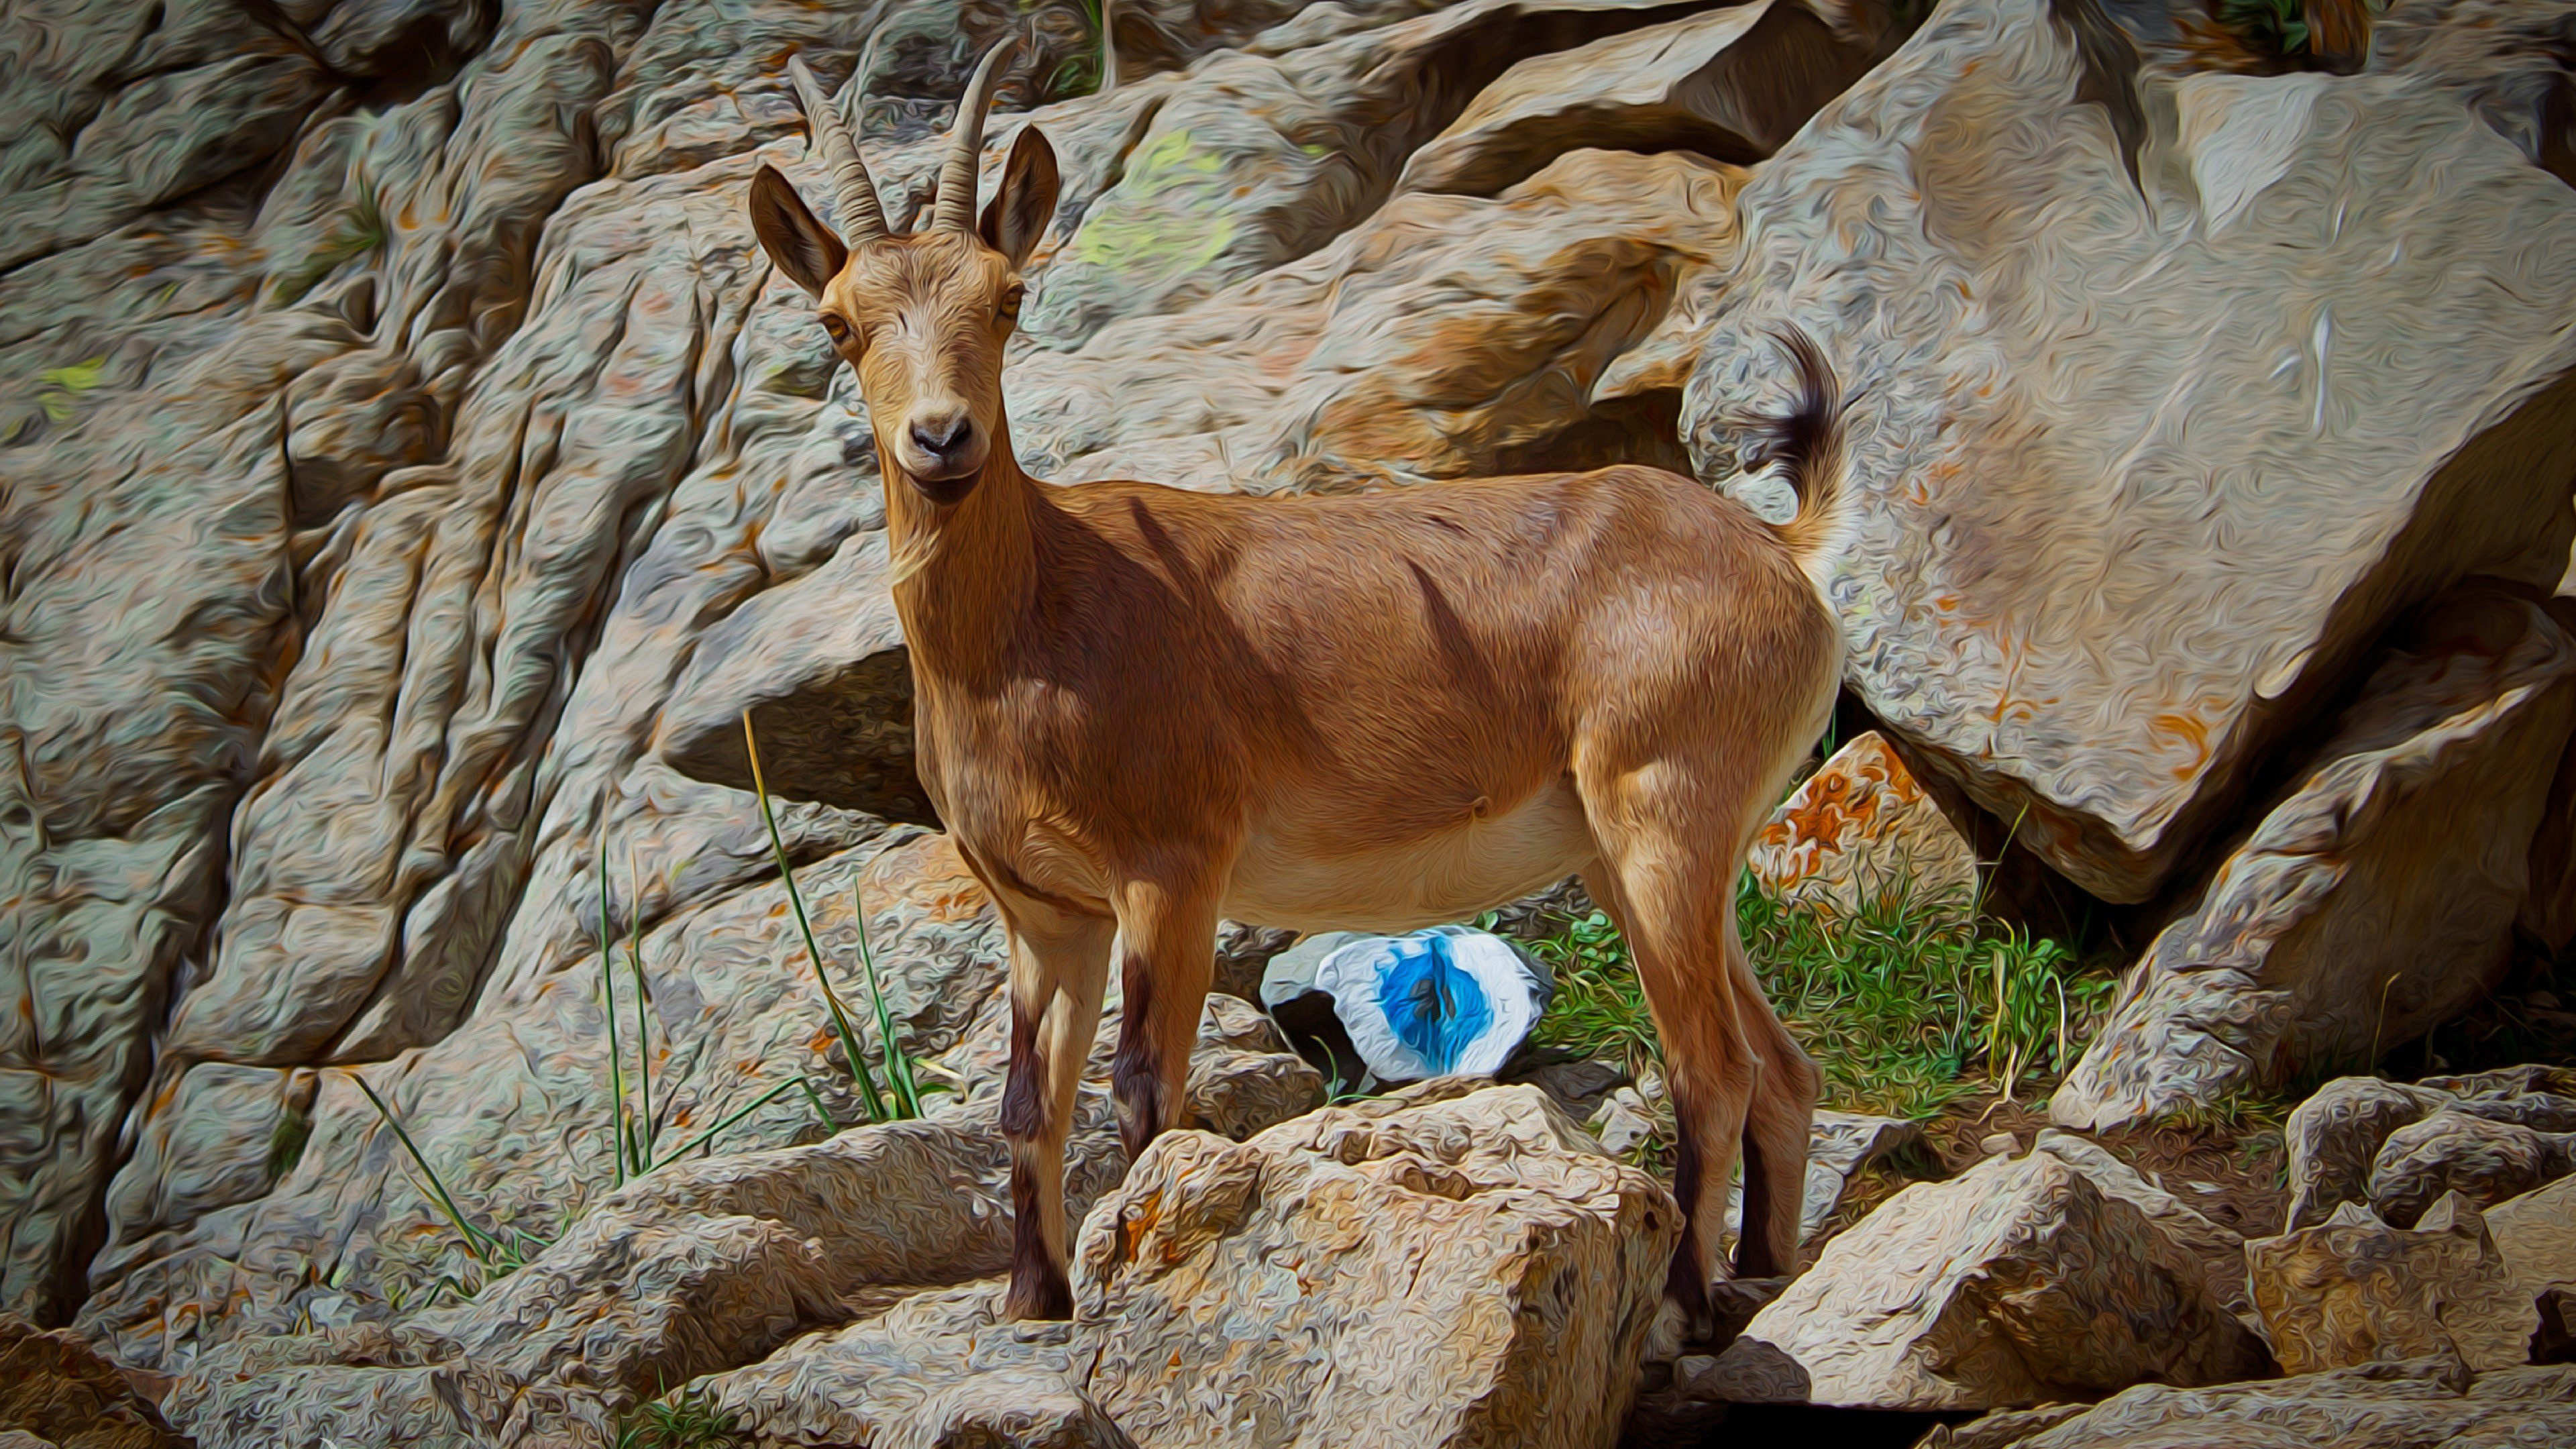 Mountain goat, Majestic creature, breathtaking view, Nature's beauty, 3840x2160 4K Desktop